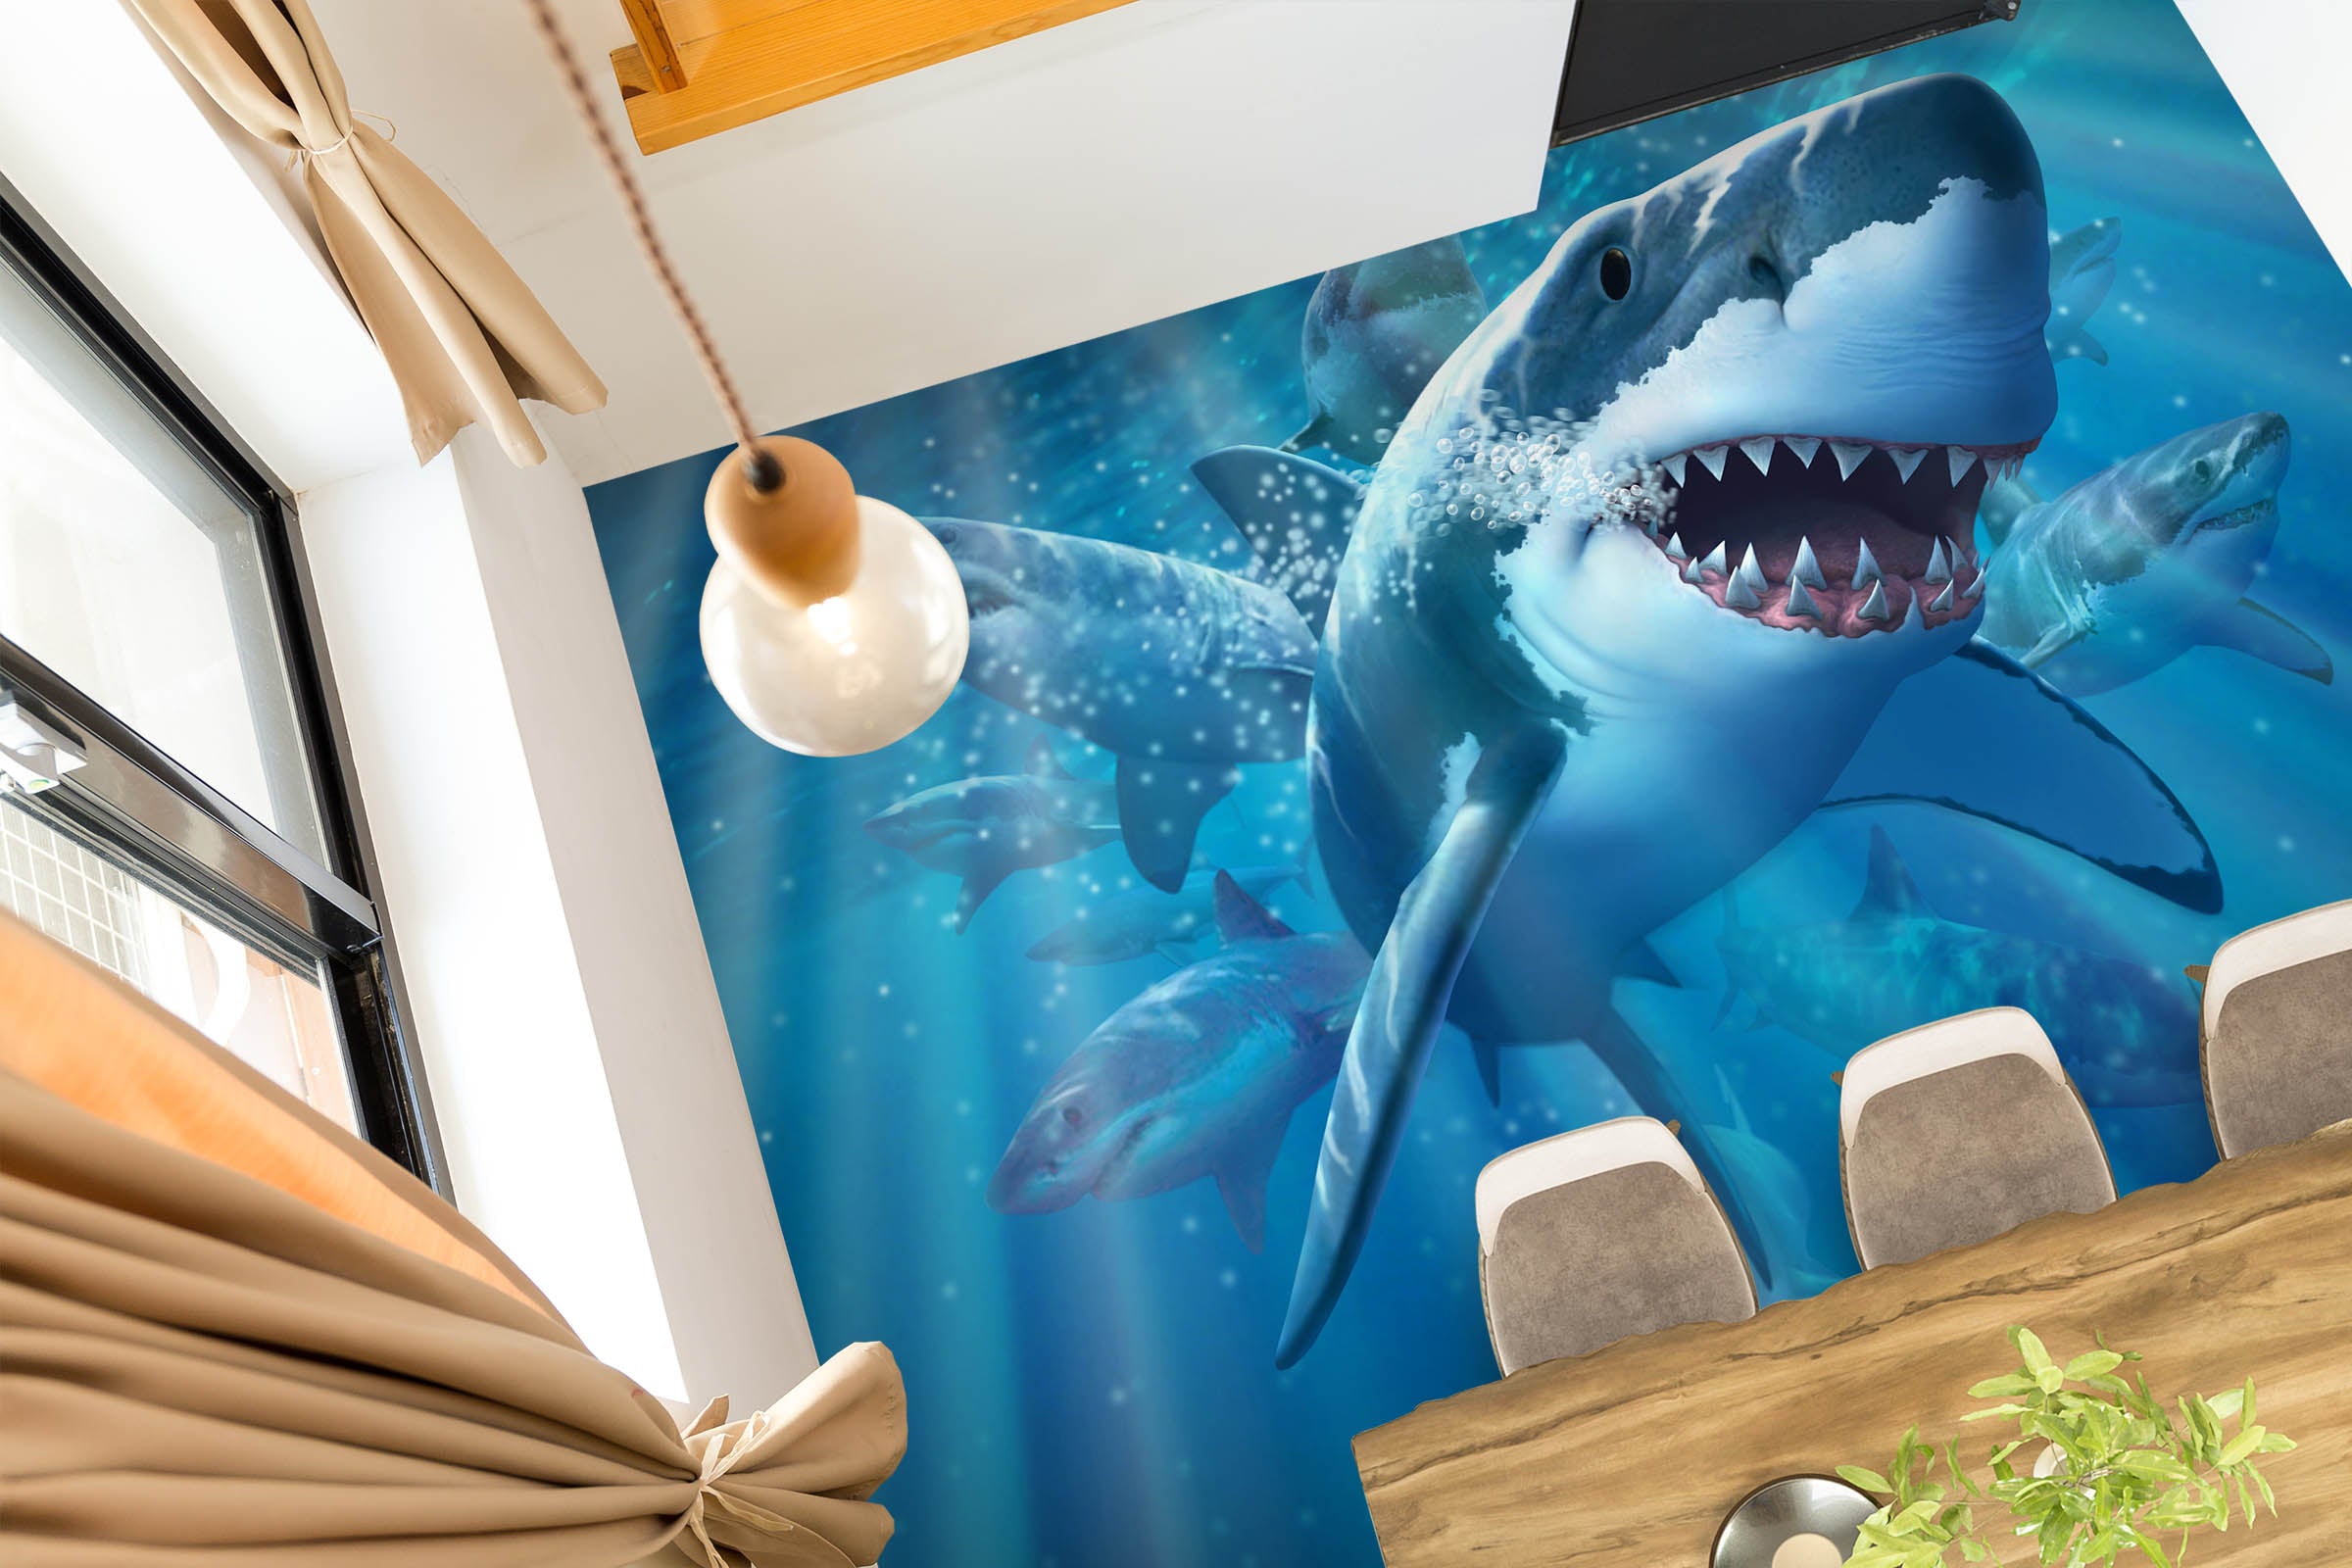 3D Ocean Shark 96221 Jerry LoFaro Floor Mural  Wallpaper Murals Self-Adhesive Removable Print Epoxy